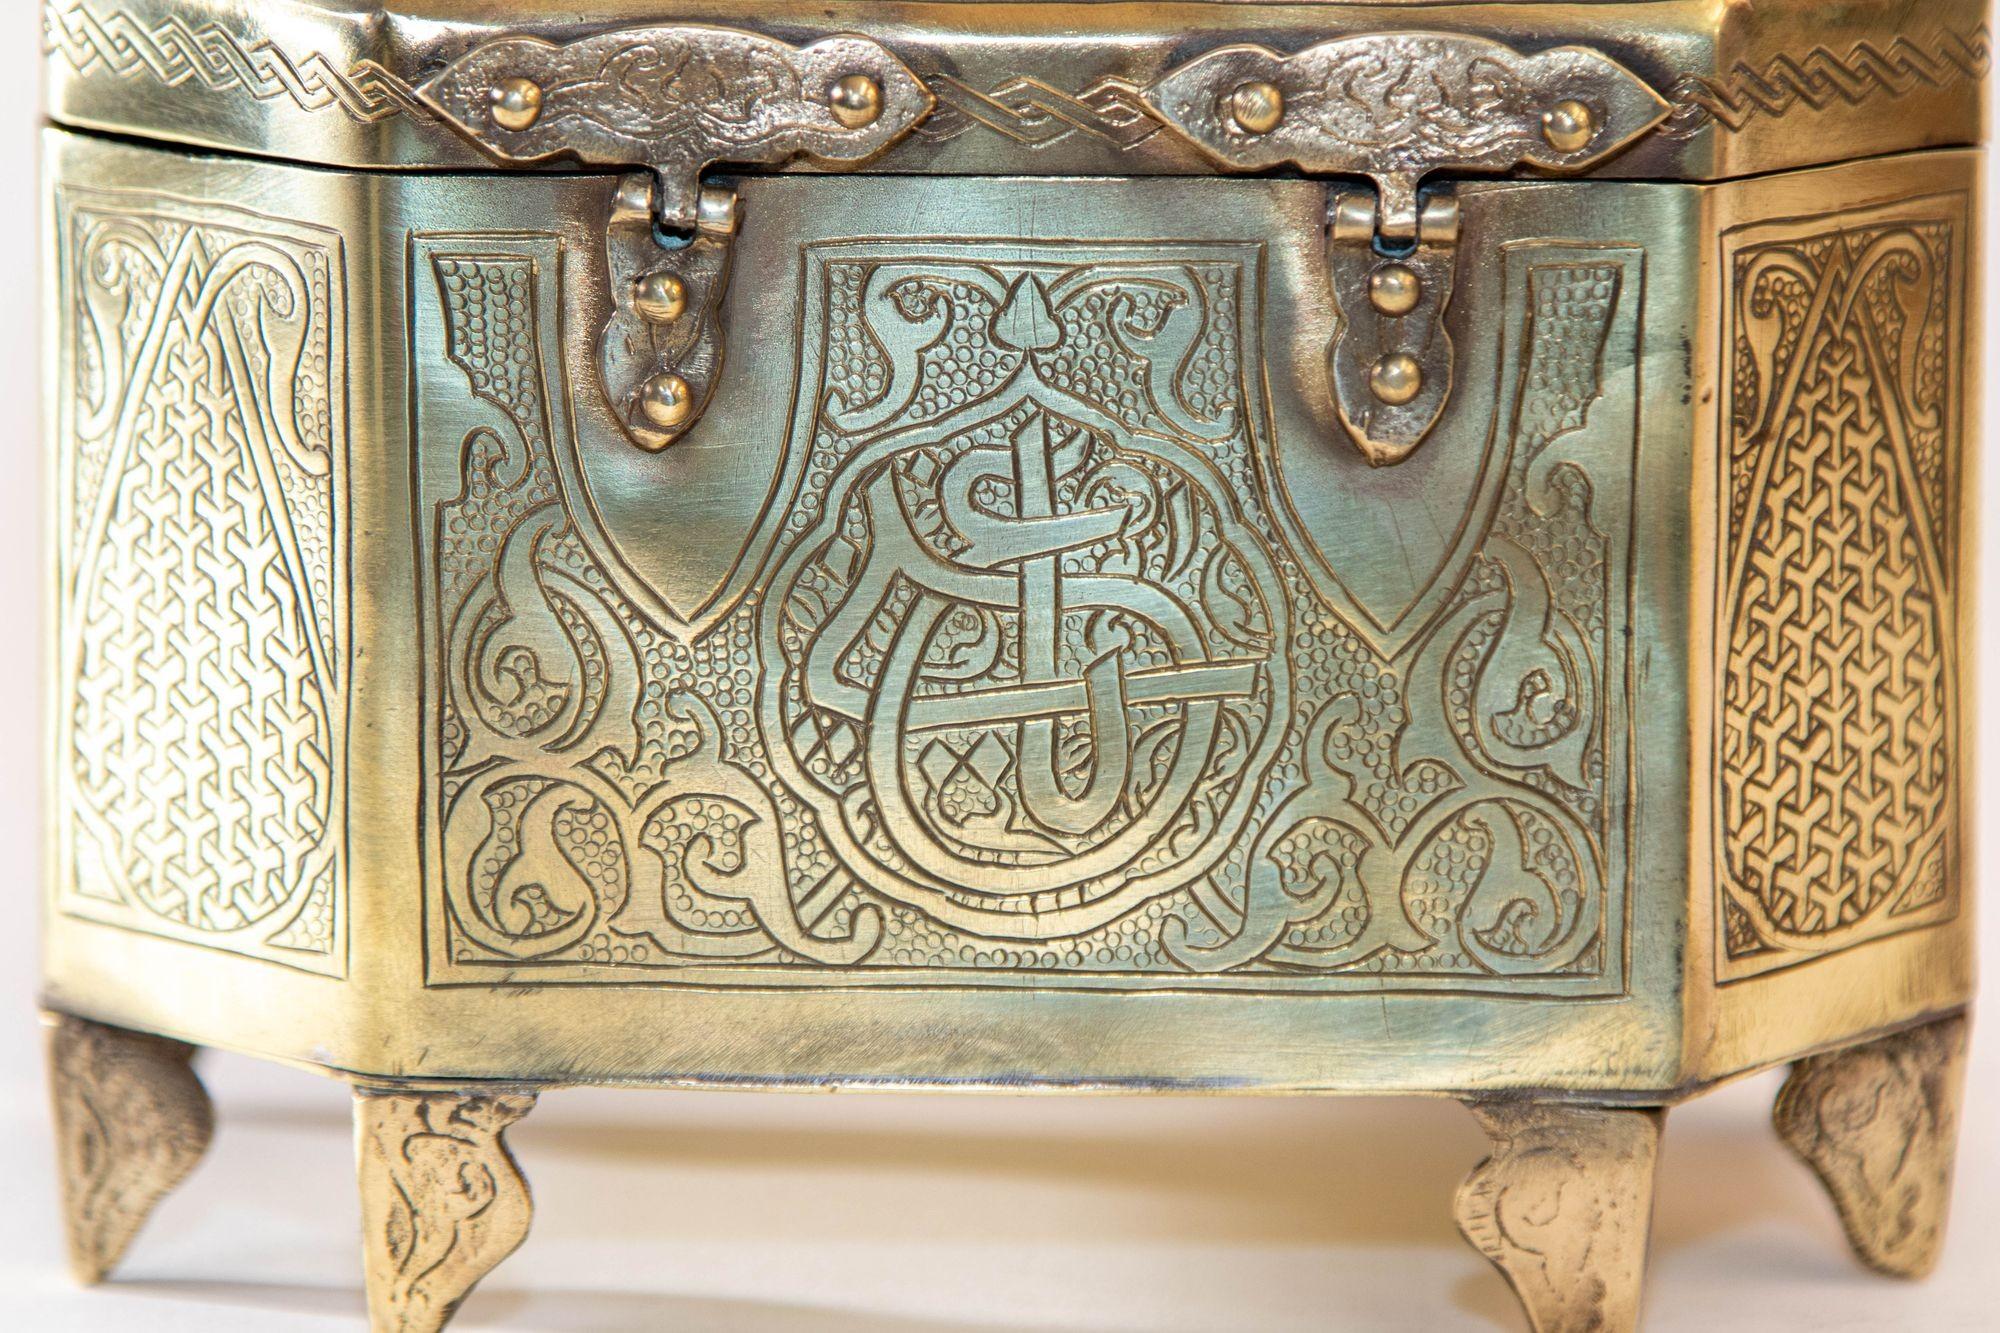 1920 Persian Brass Jewelry Box in Mamluk Revival Damascene Moorish Islamic Style For Sale 6